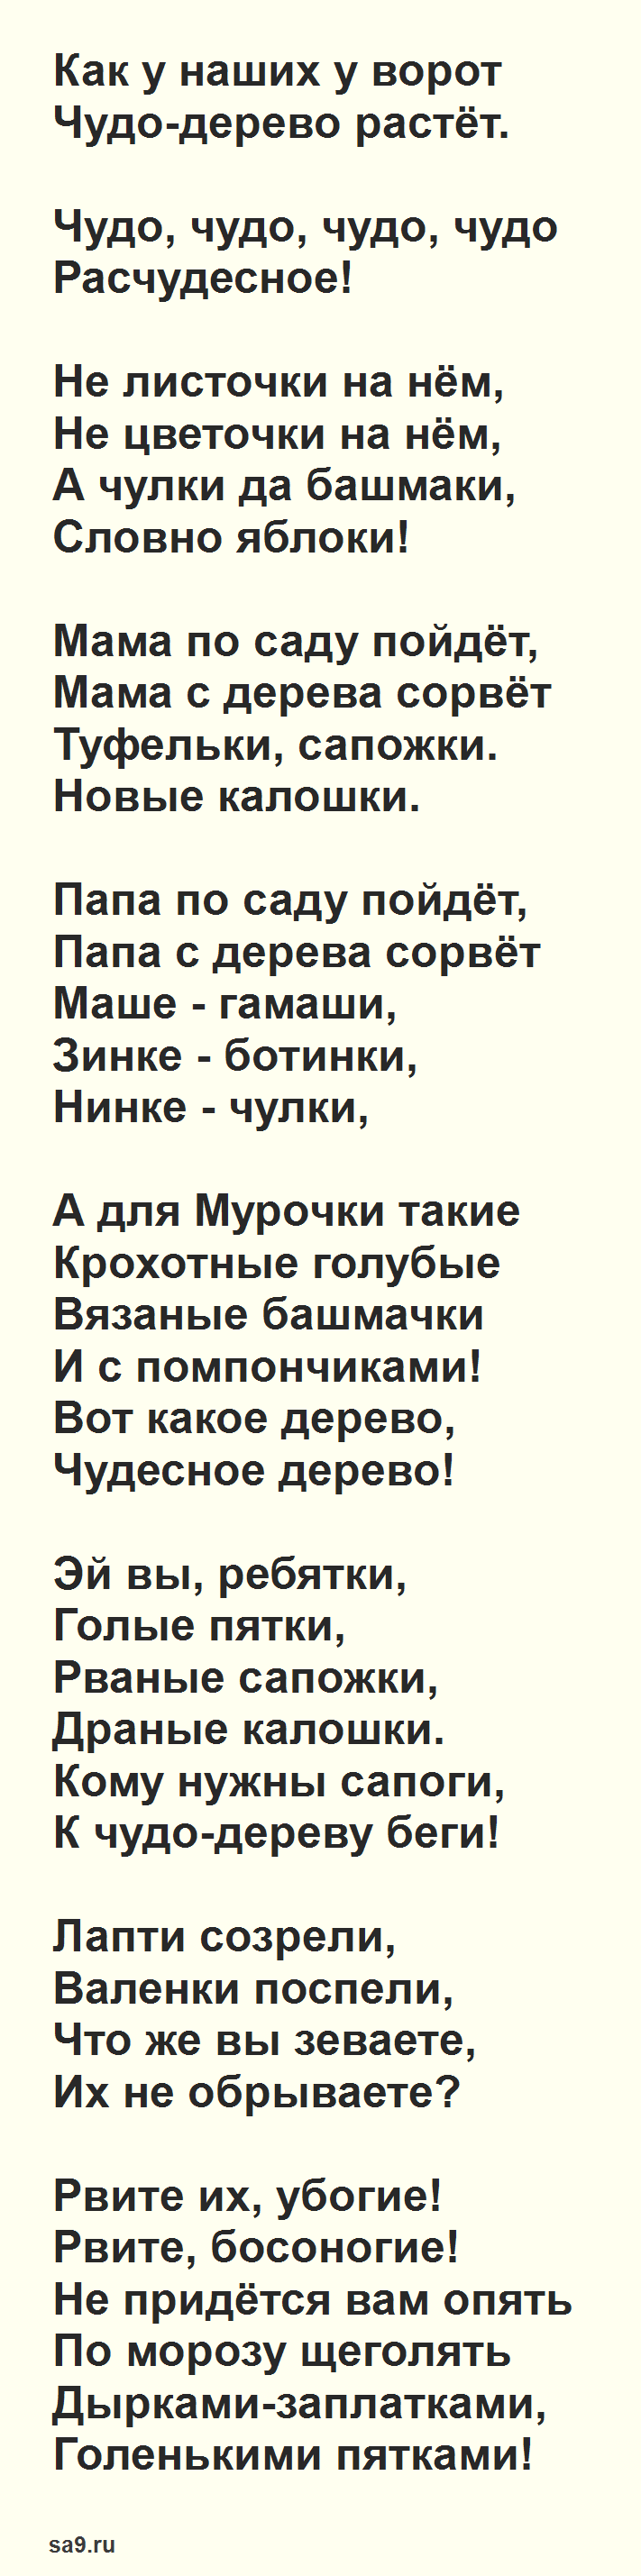 Корней Чуковский стихи для детей - Чудо-дерево